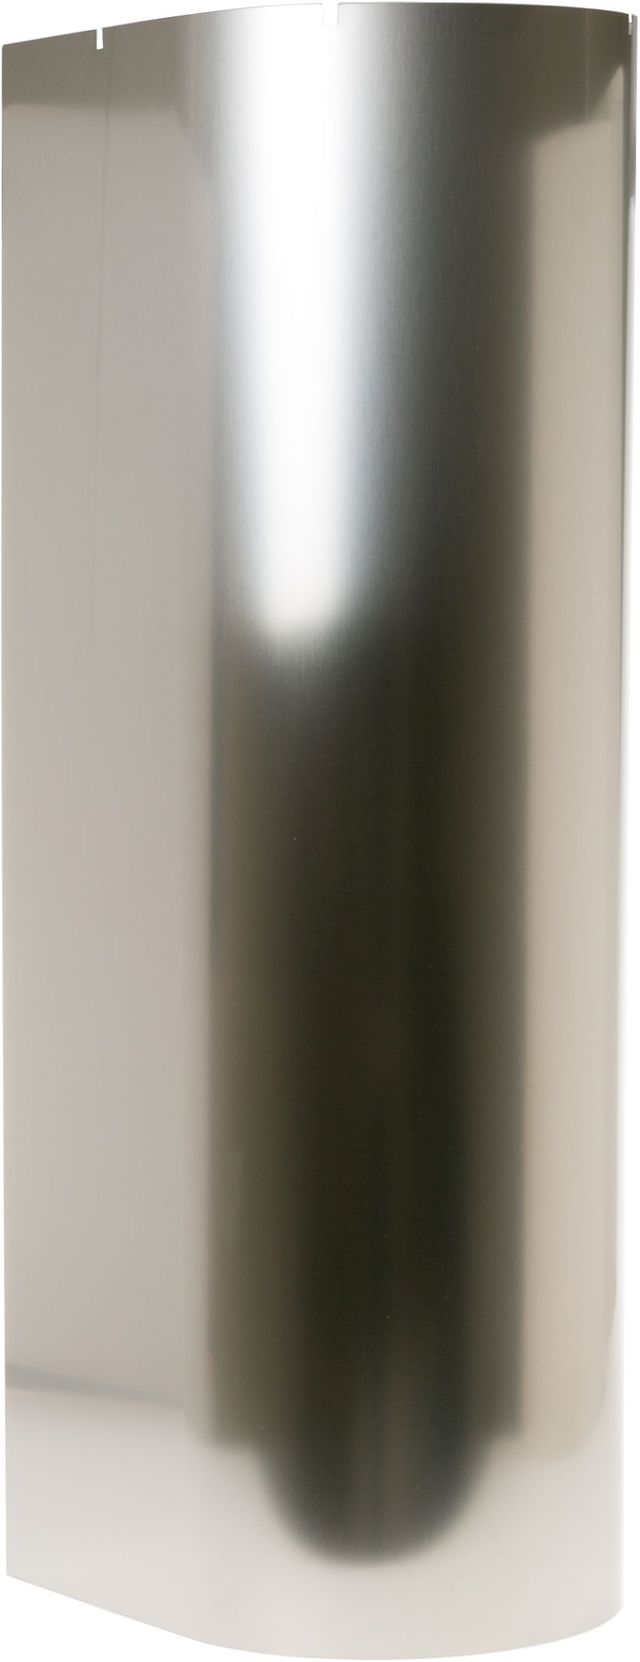 Monogram® 9-10' Ceiling Duct Cover